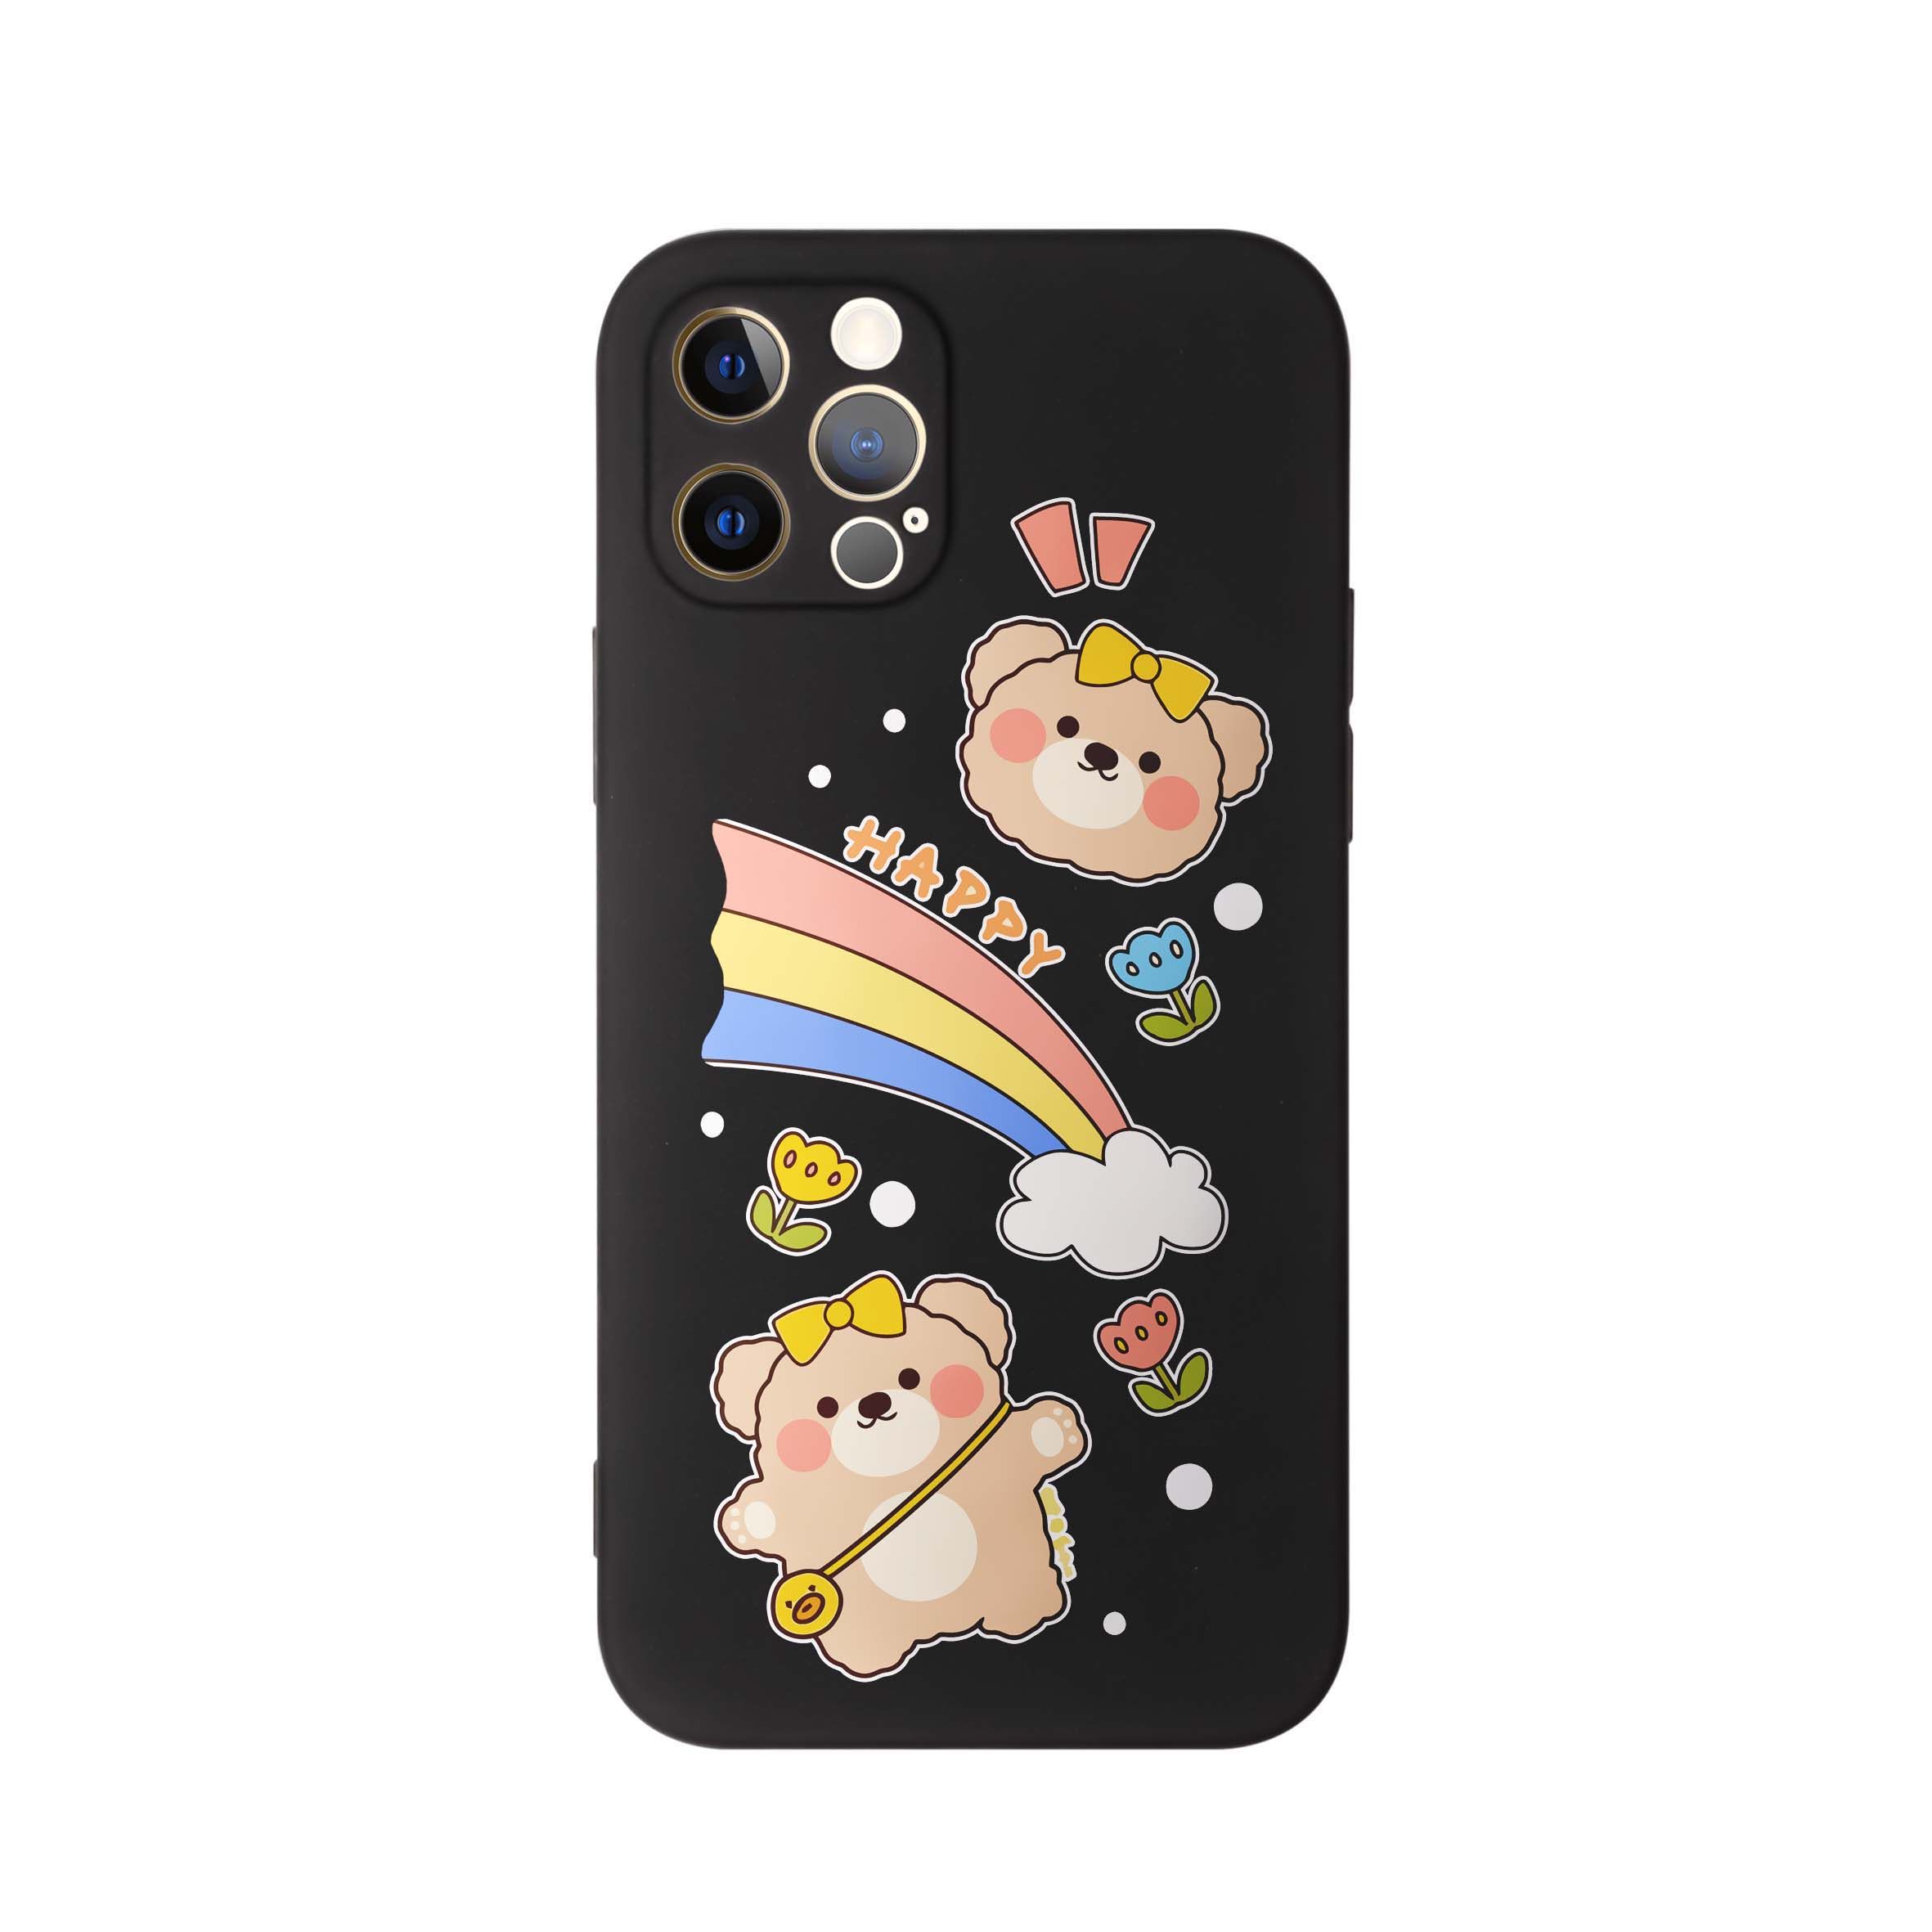 کاور طرح خرس رنگین کمان کد m4328 مناسب برای گوشی موبایل اپل iphone 11 Pro